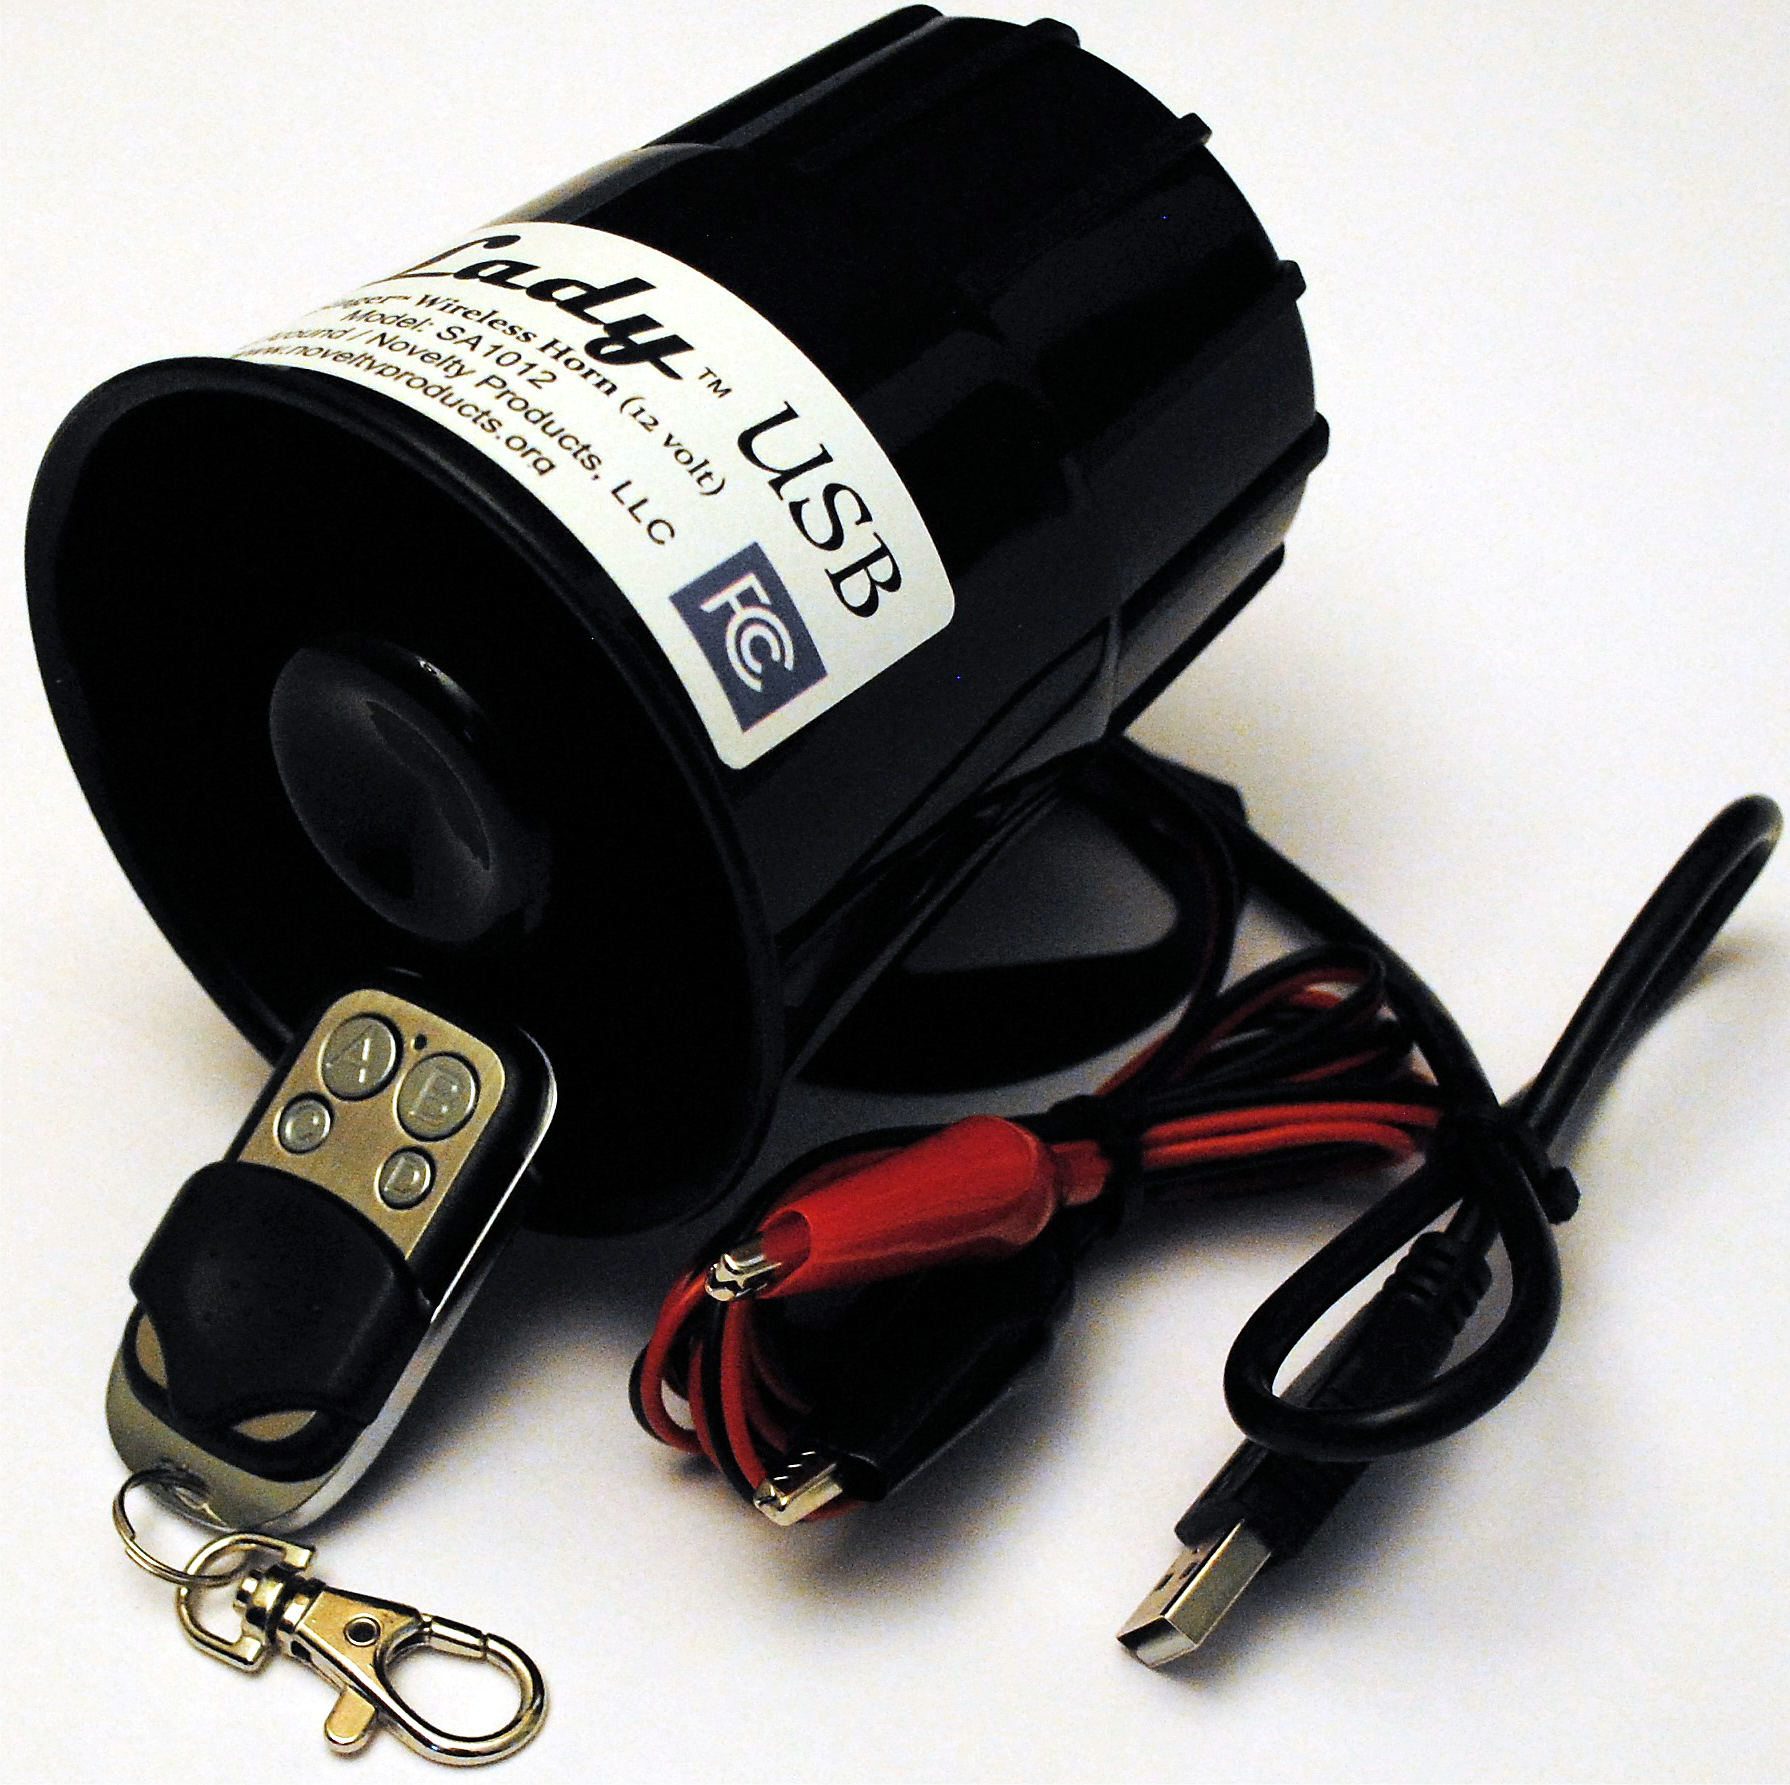 University of Nebraska Cornhuskers USB Car Horn with Wireless KeyFOB Remote